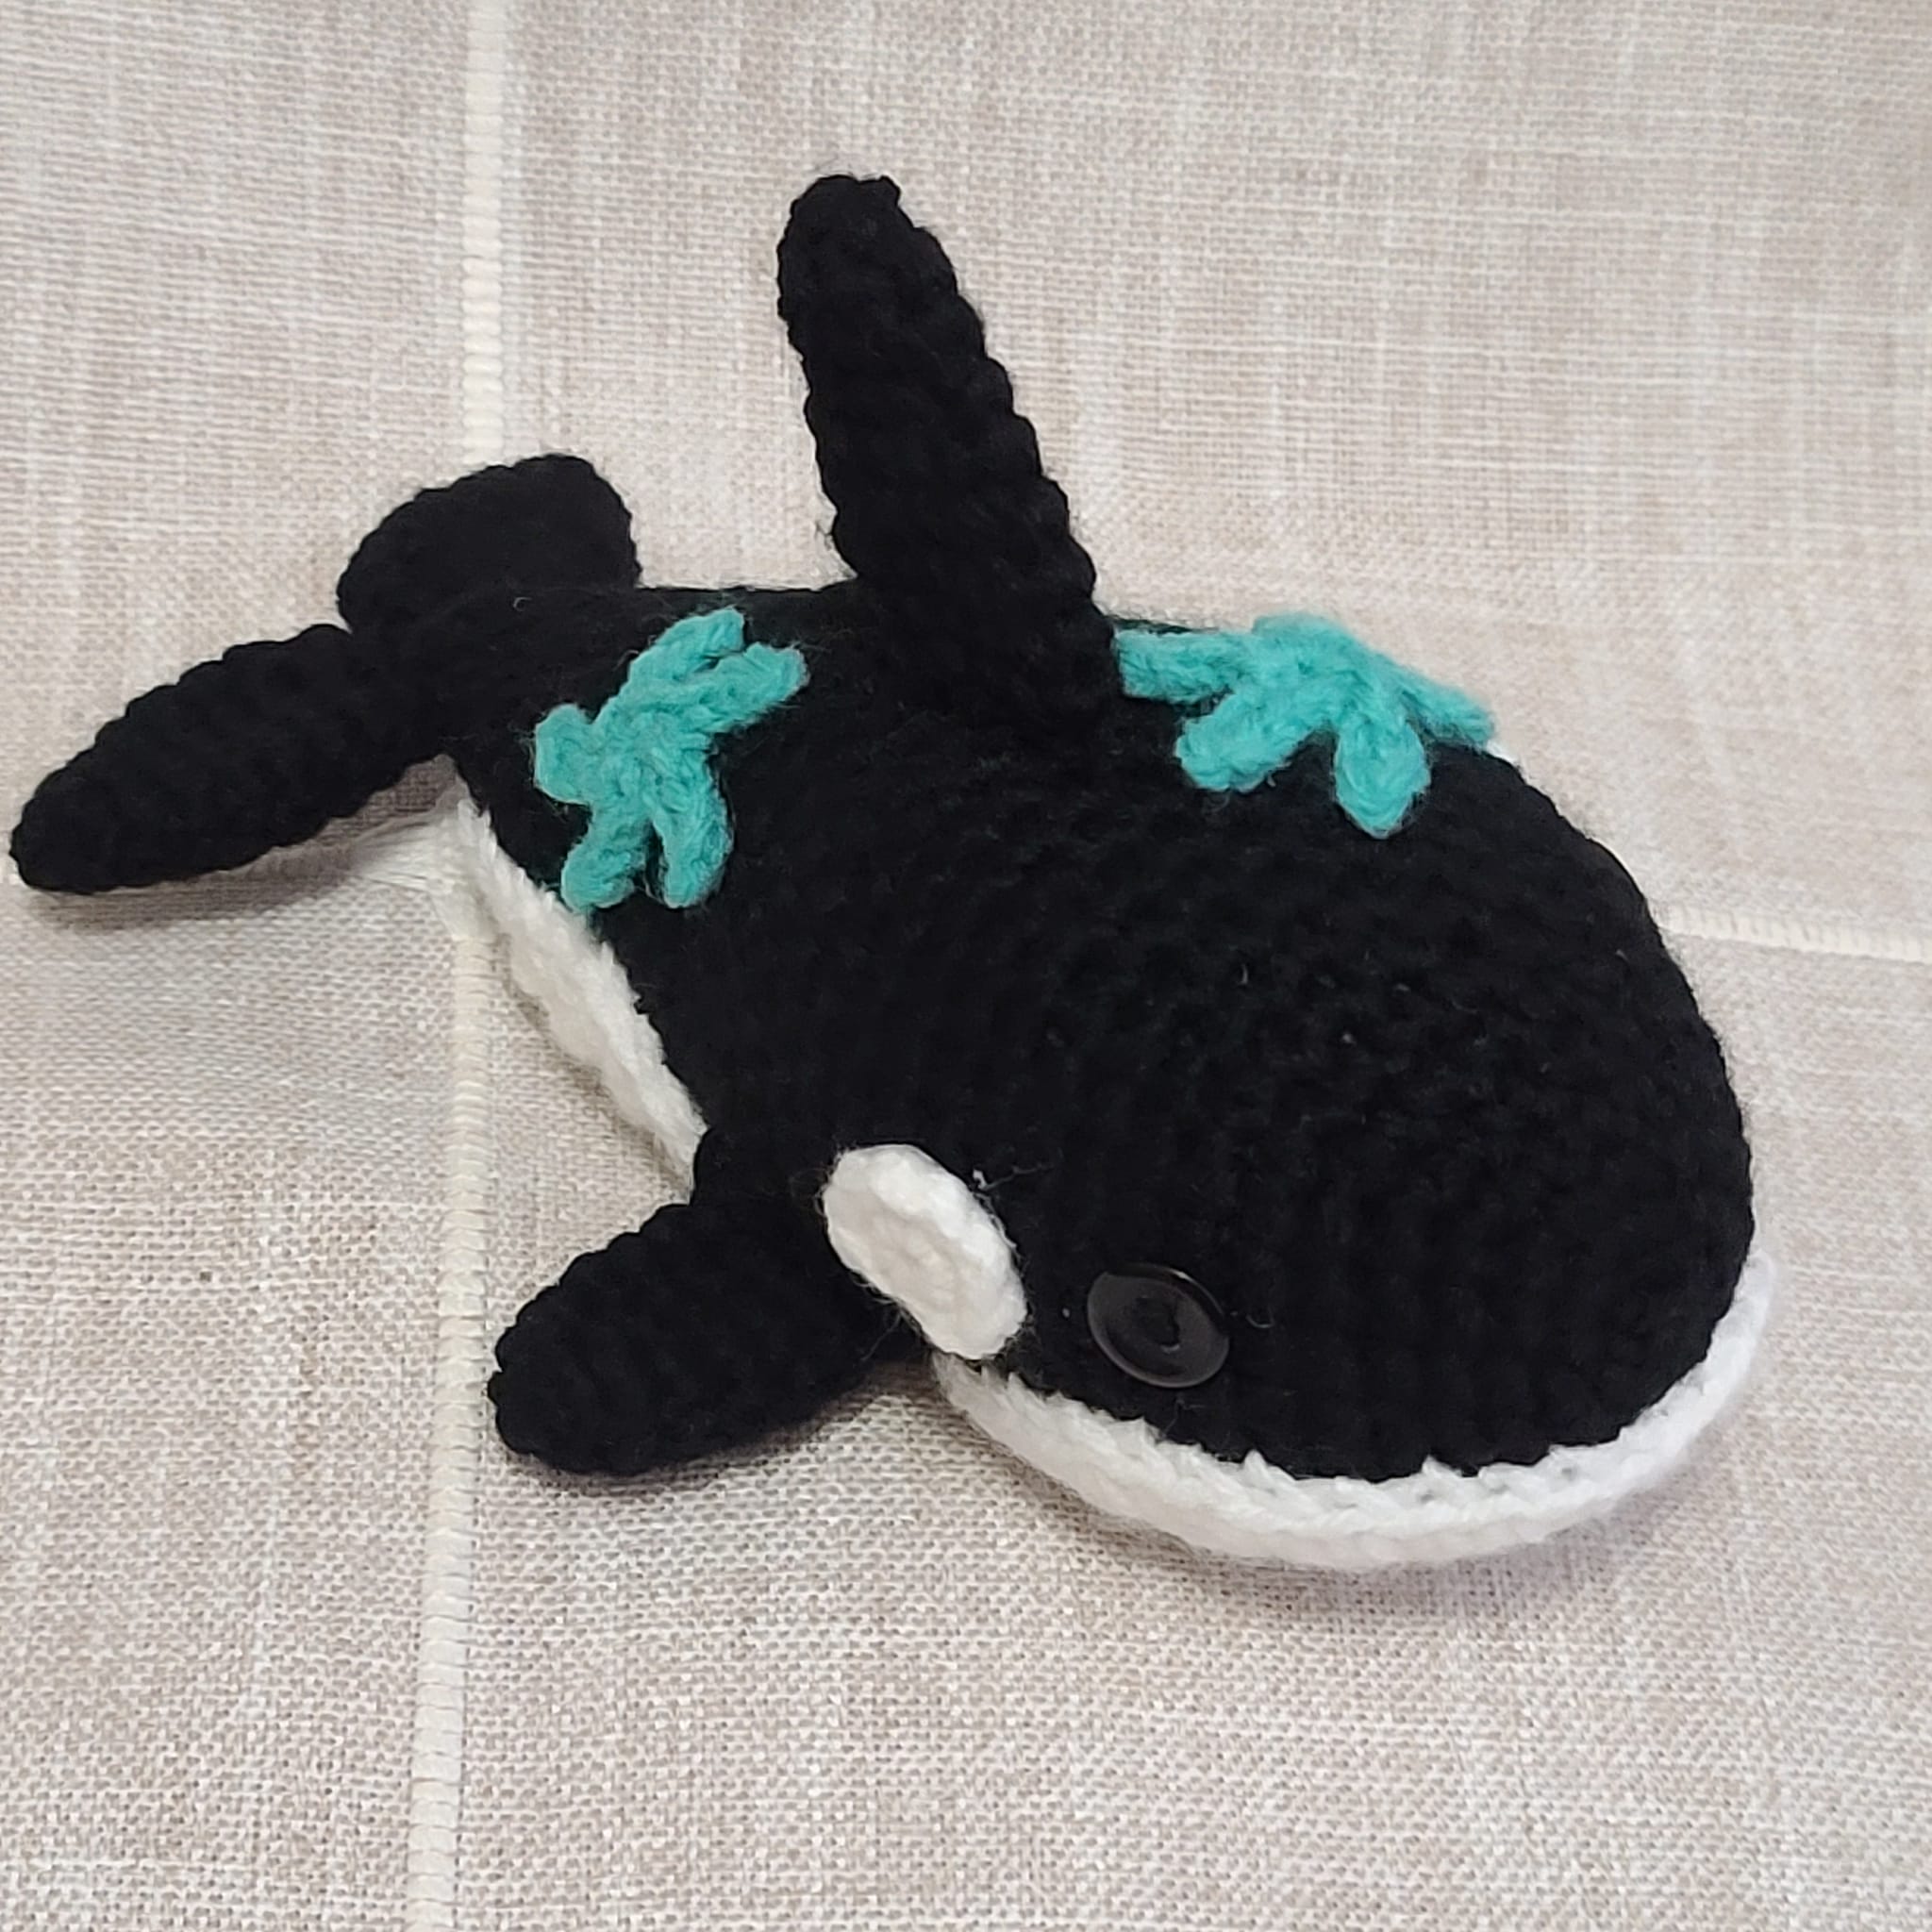 Crochet amigurumi handmade stuffed orca with starfish